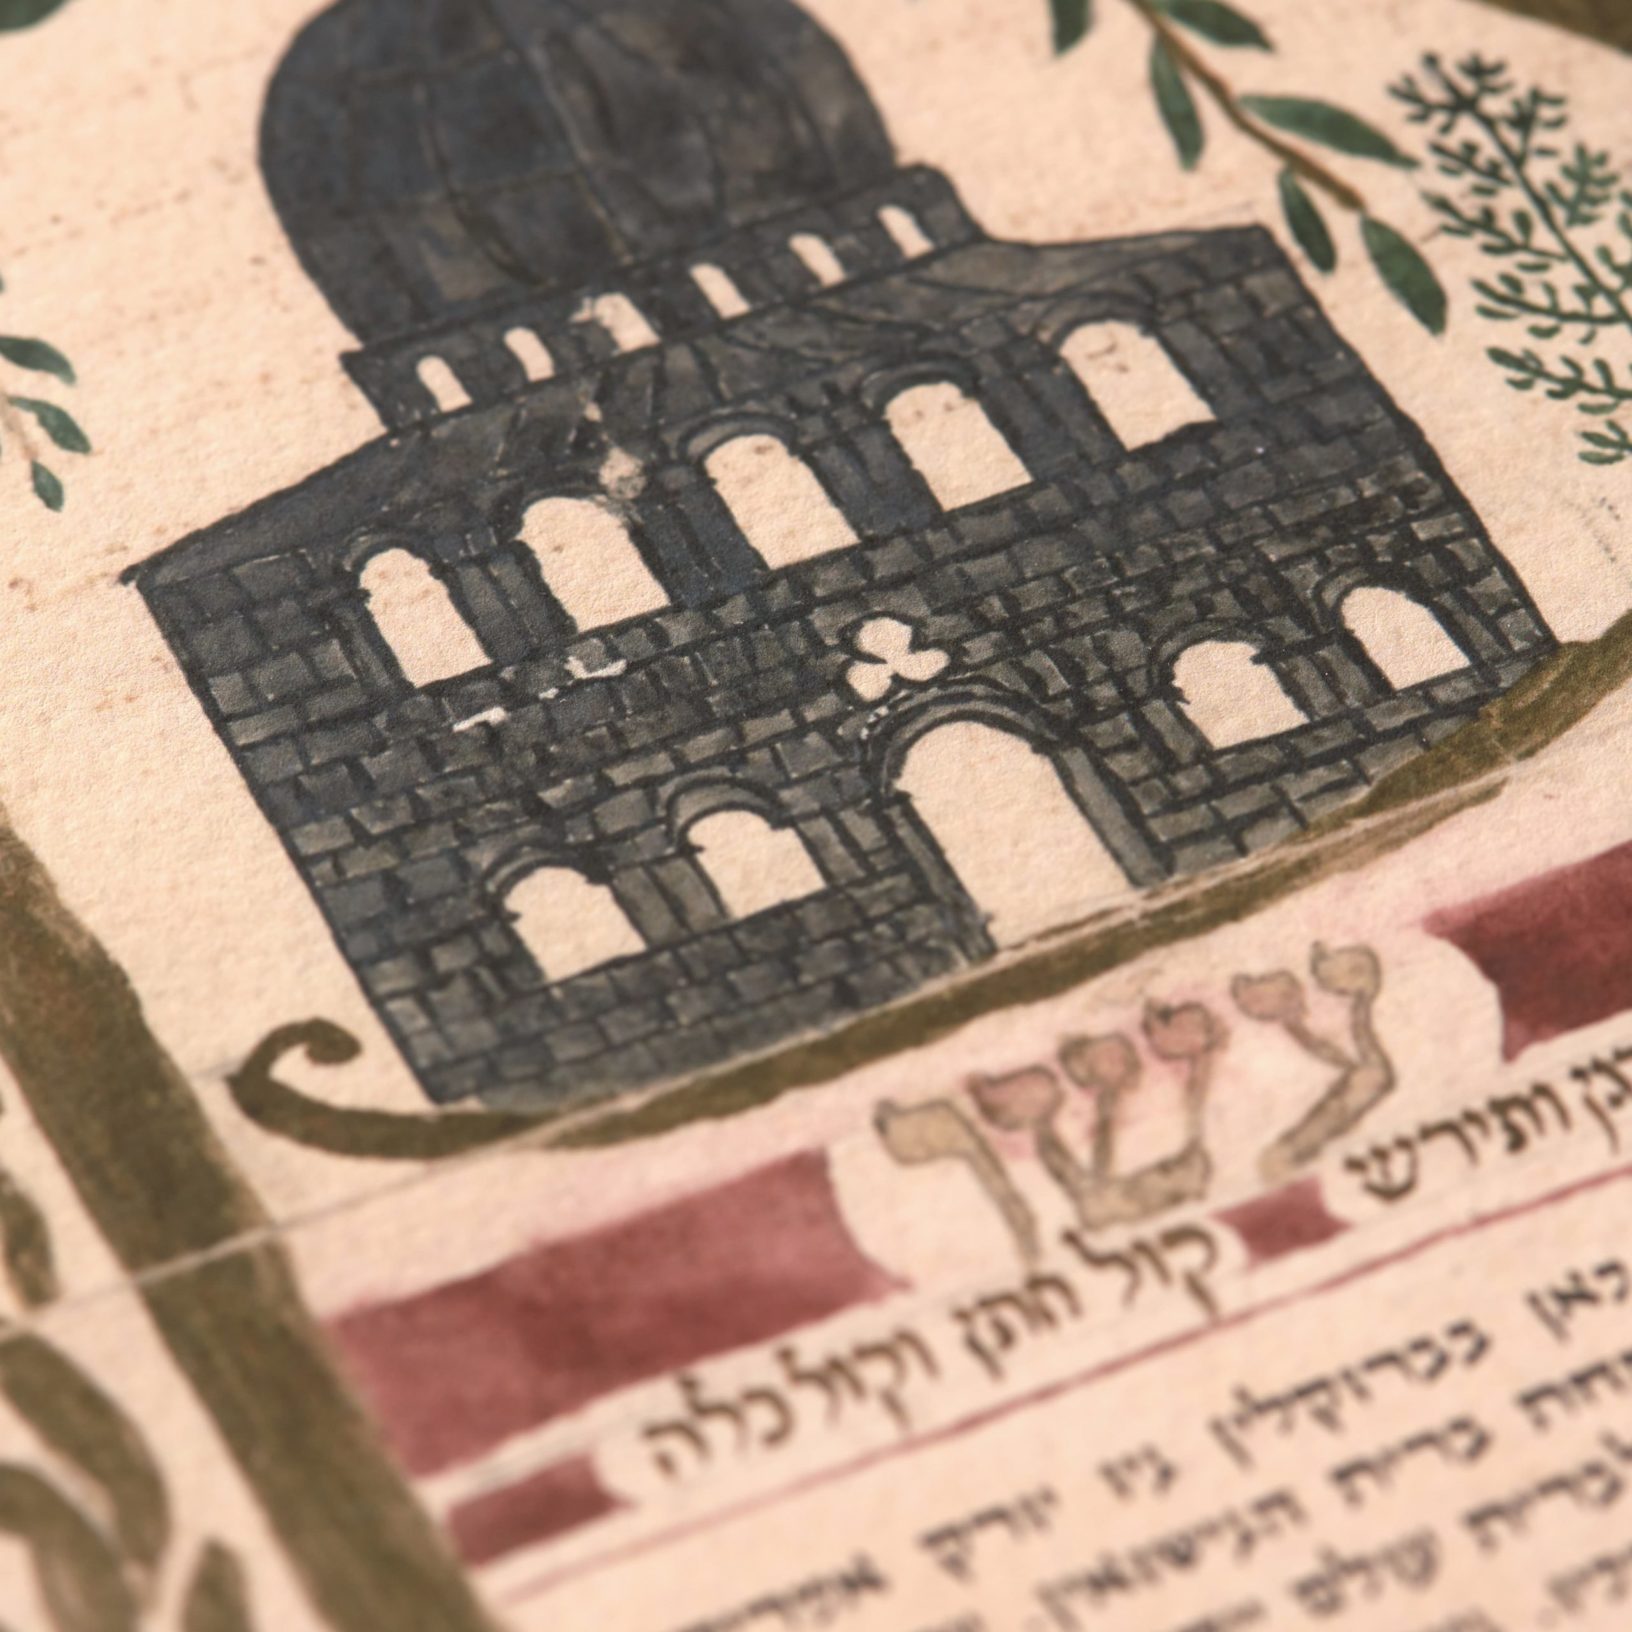 Jerusalem, Israel, 1895 Ketubah Designs by The National Library Of Israel